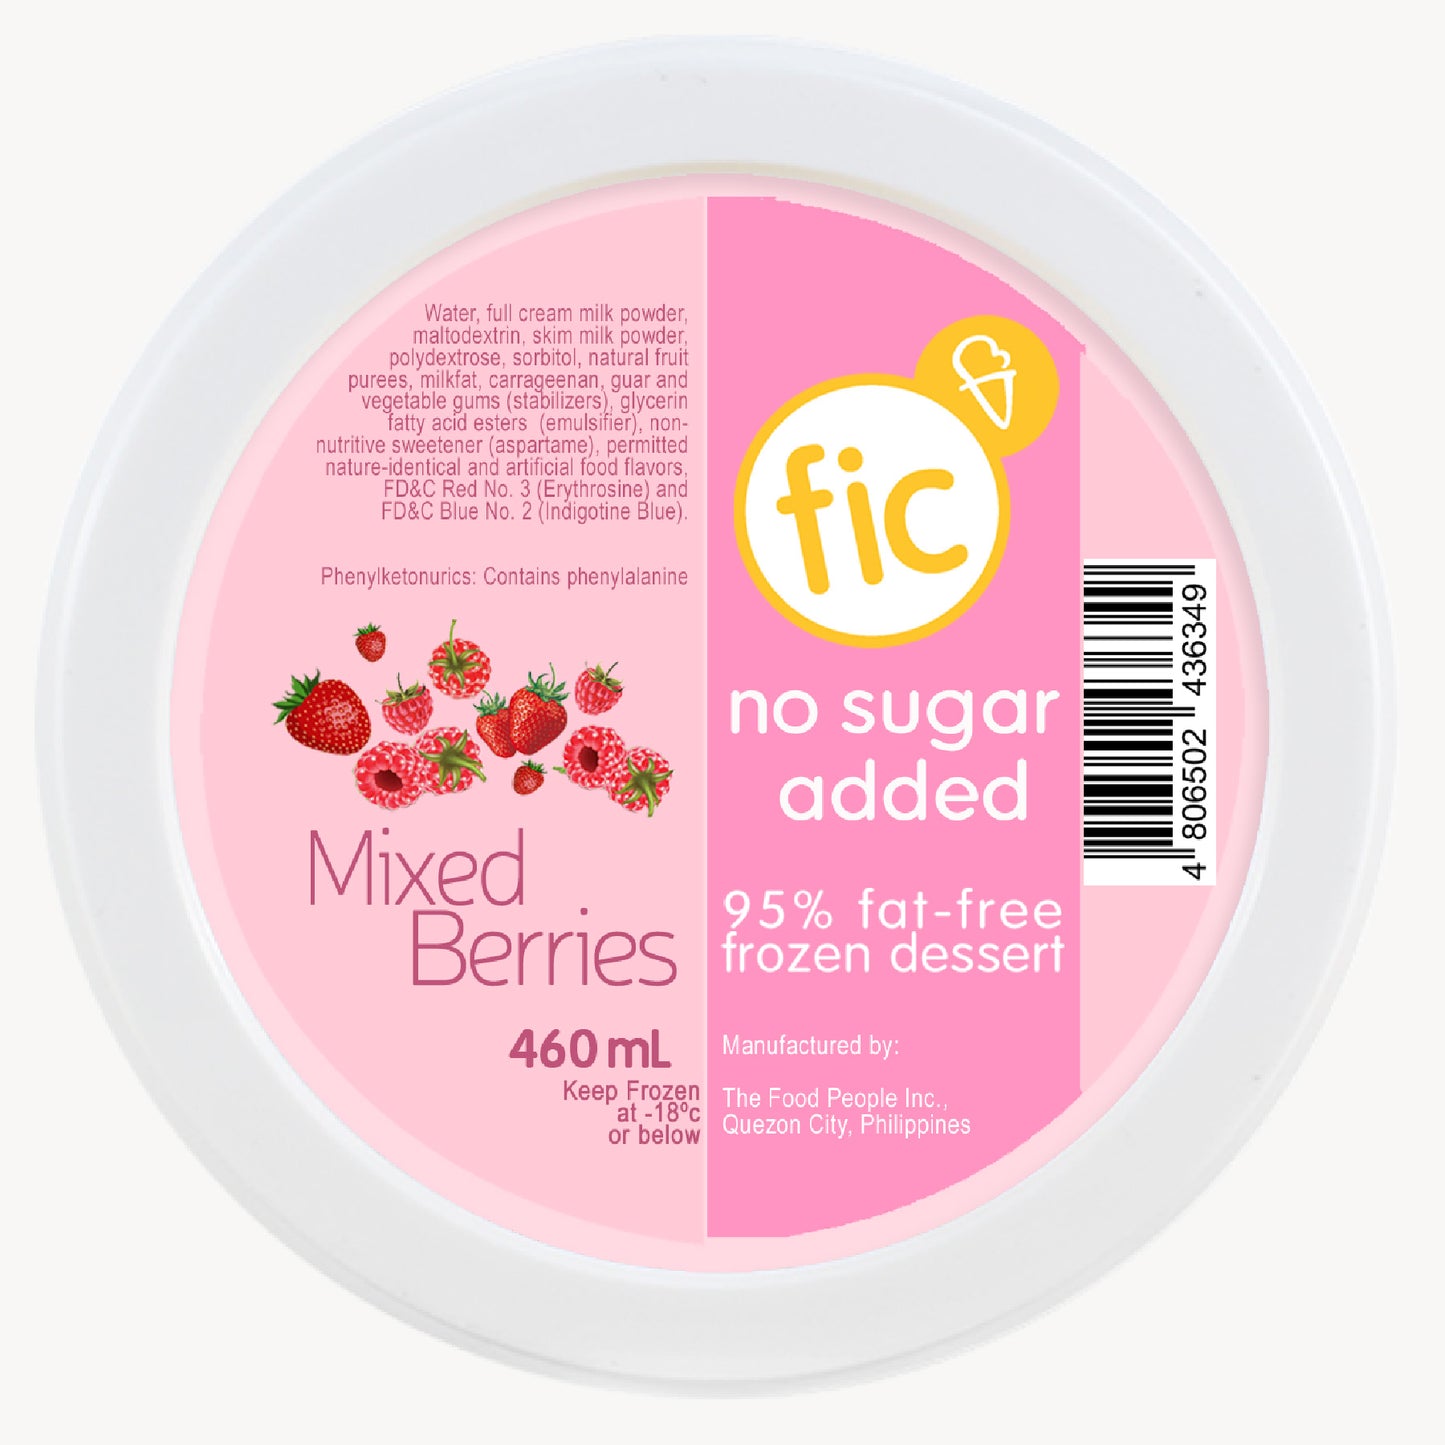 FIC Fruits in Ice Cream